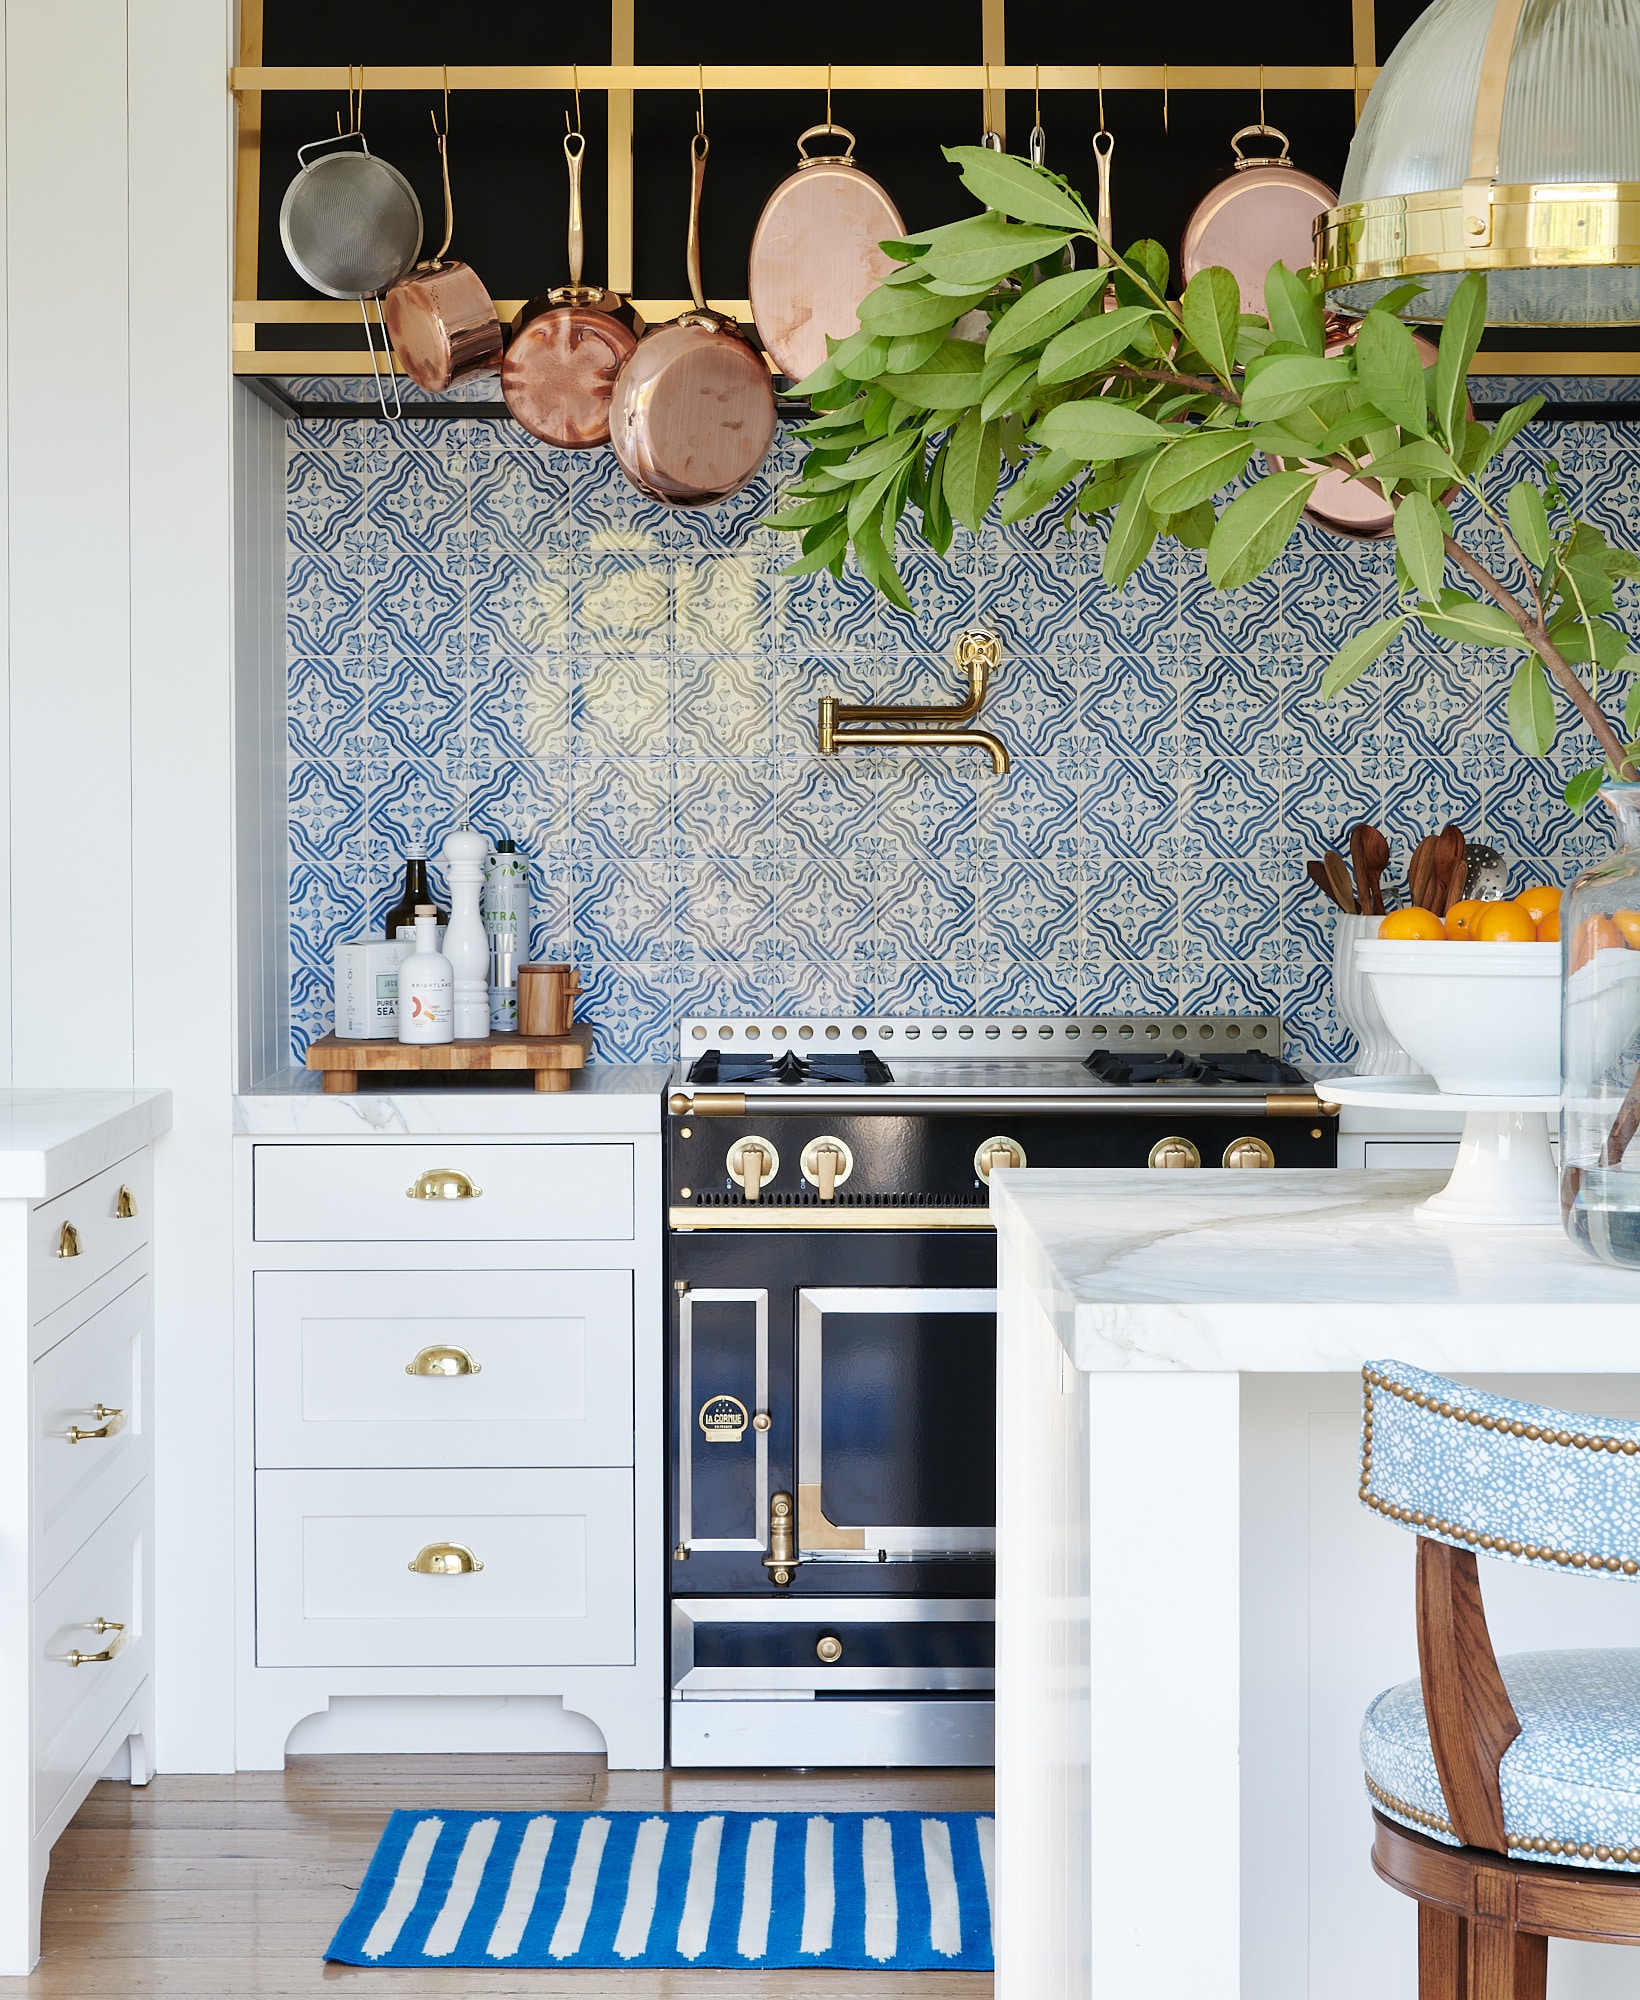 Lovely in Larkspur - Mark D. Sikes - Amy Neunsinger Photography - kitchen - copper pots - copper - kitchen design - kitchen remodel